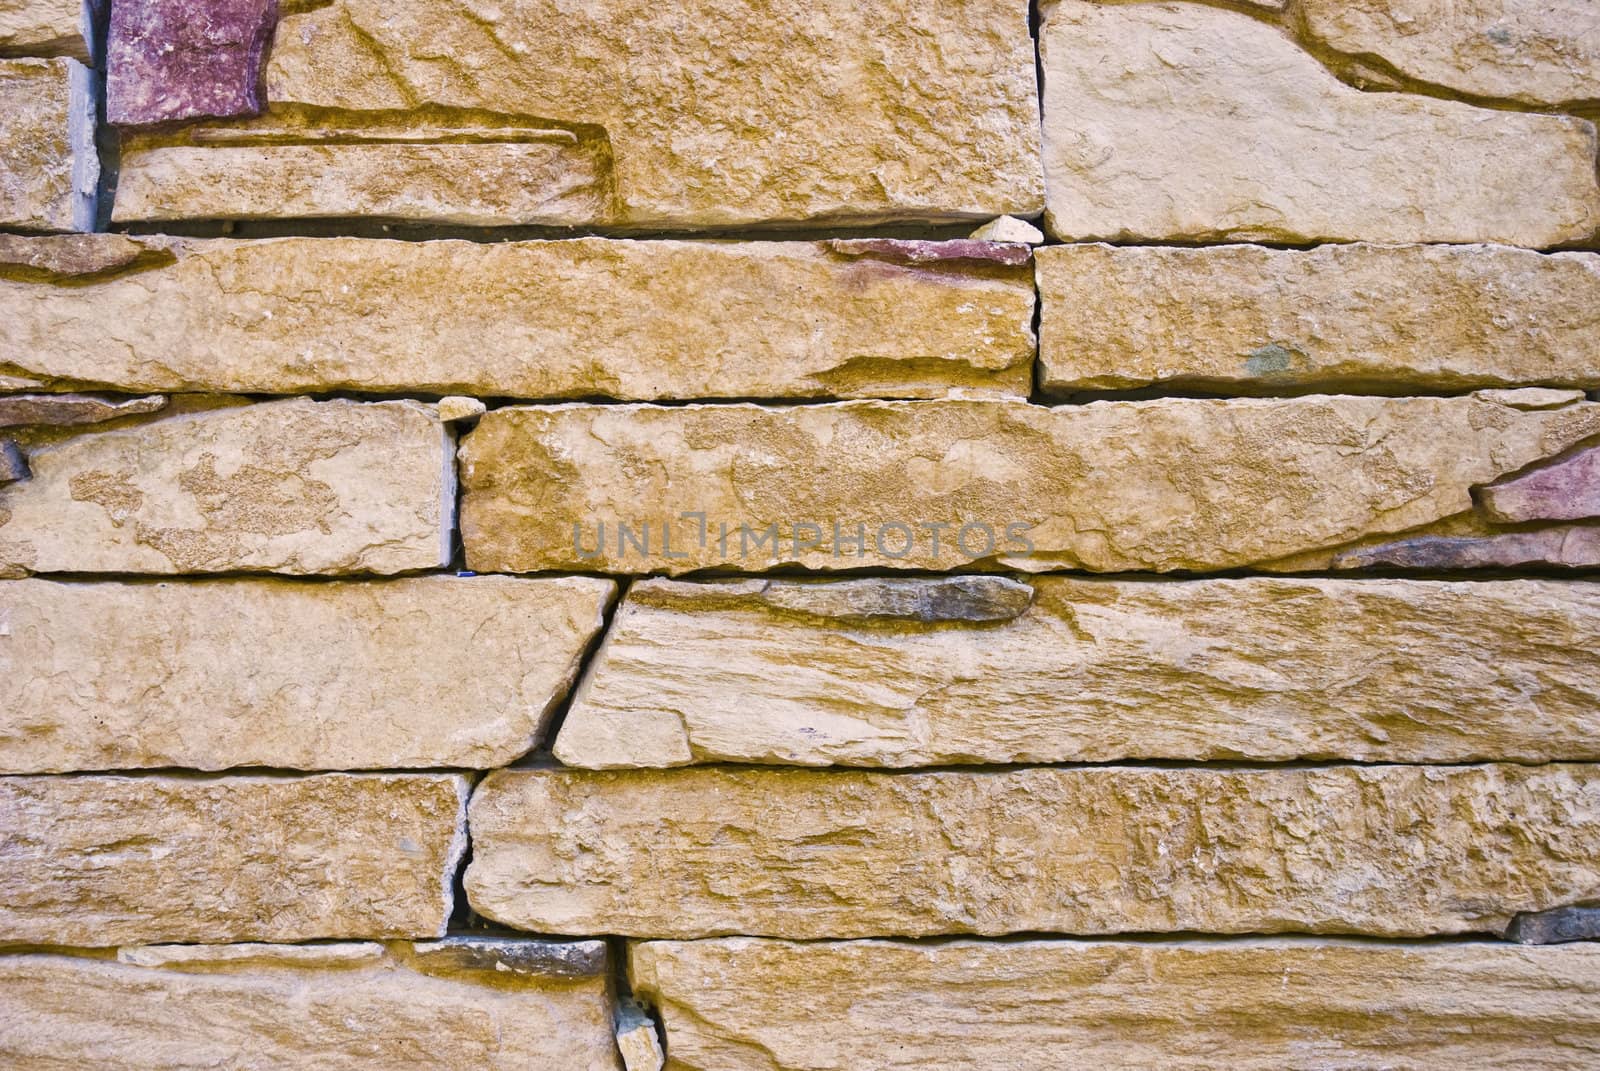 stone bricks in walls in the street